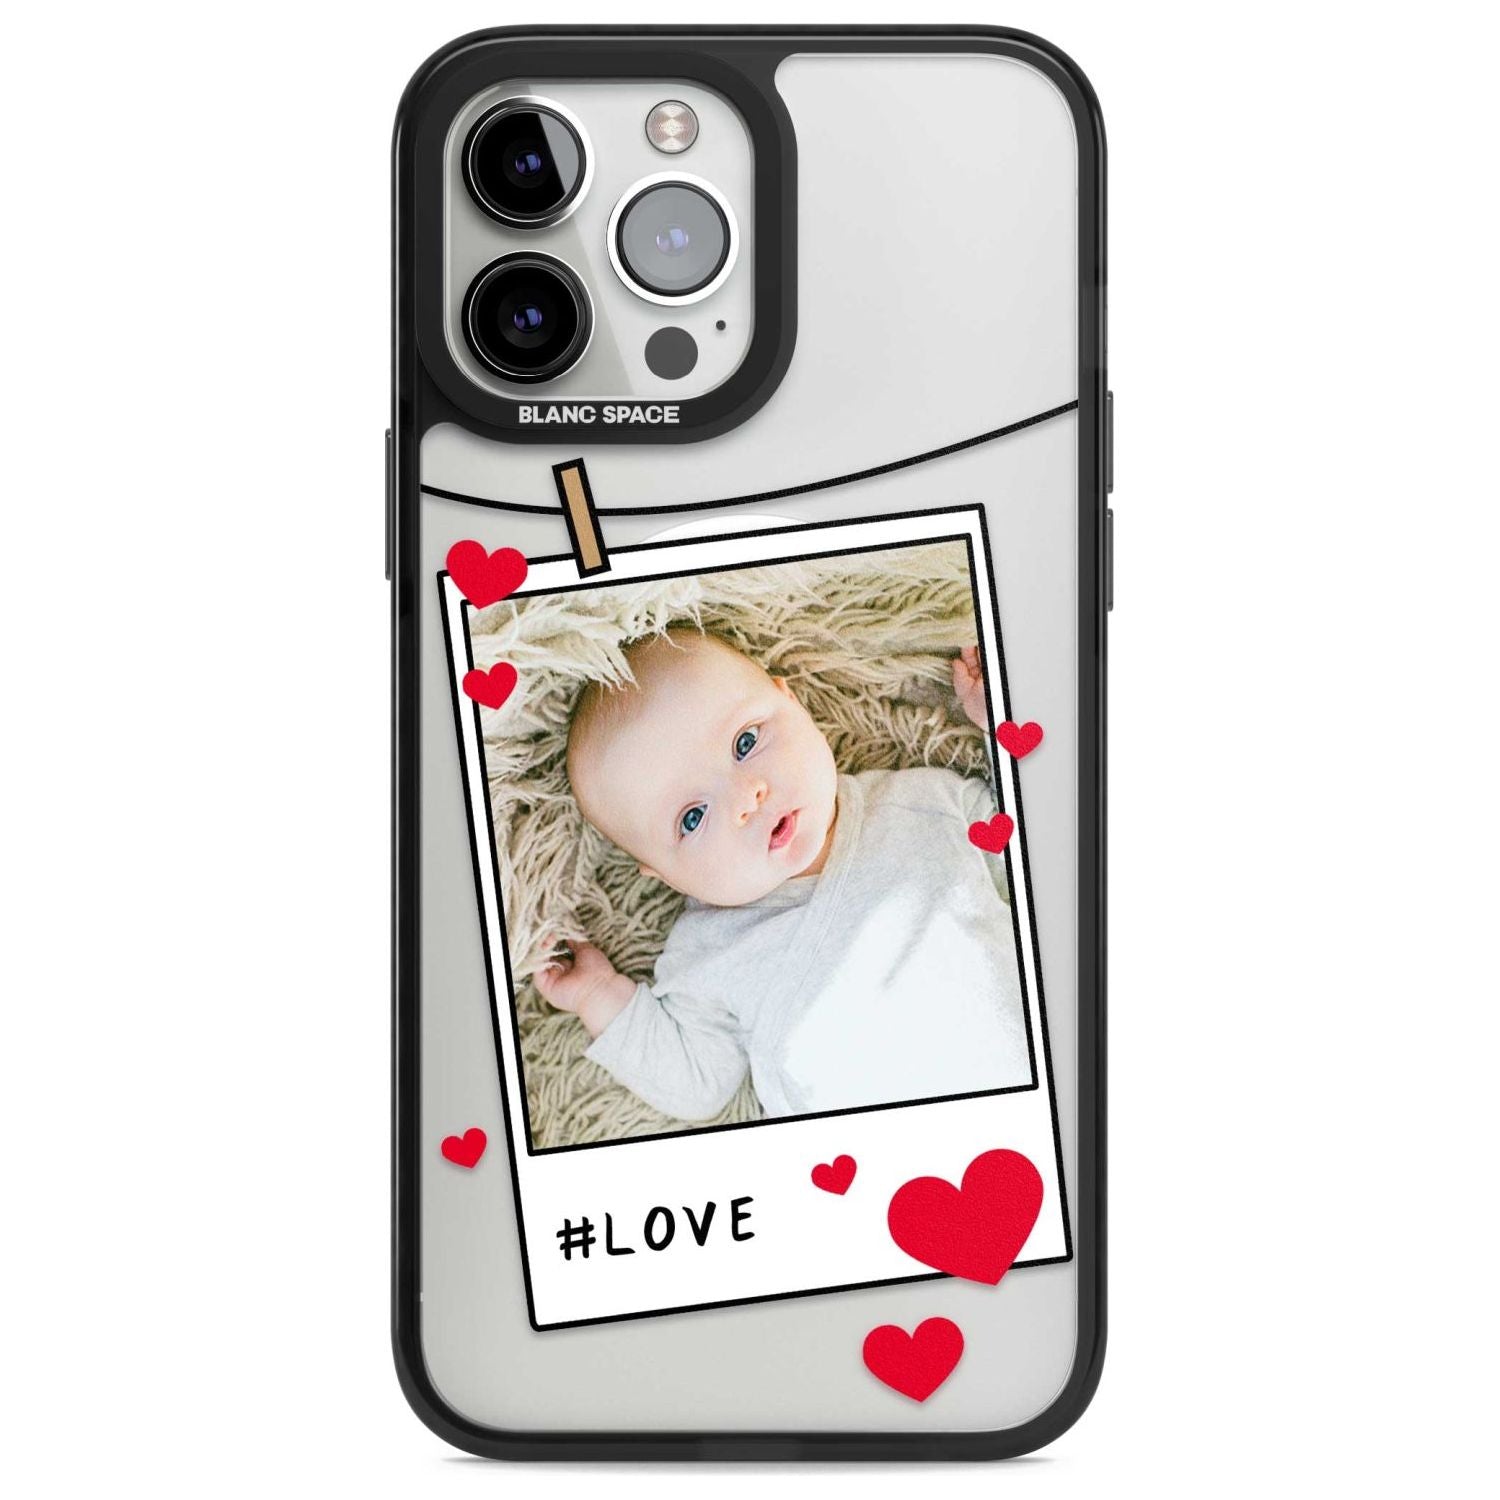 Personalised Love Instant Film Photo Custom Phone Case iPhone 13 Pro Max / Magsafe Black Impact Case Blanc Space